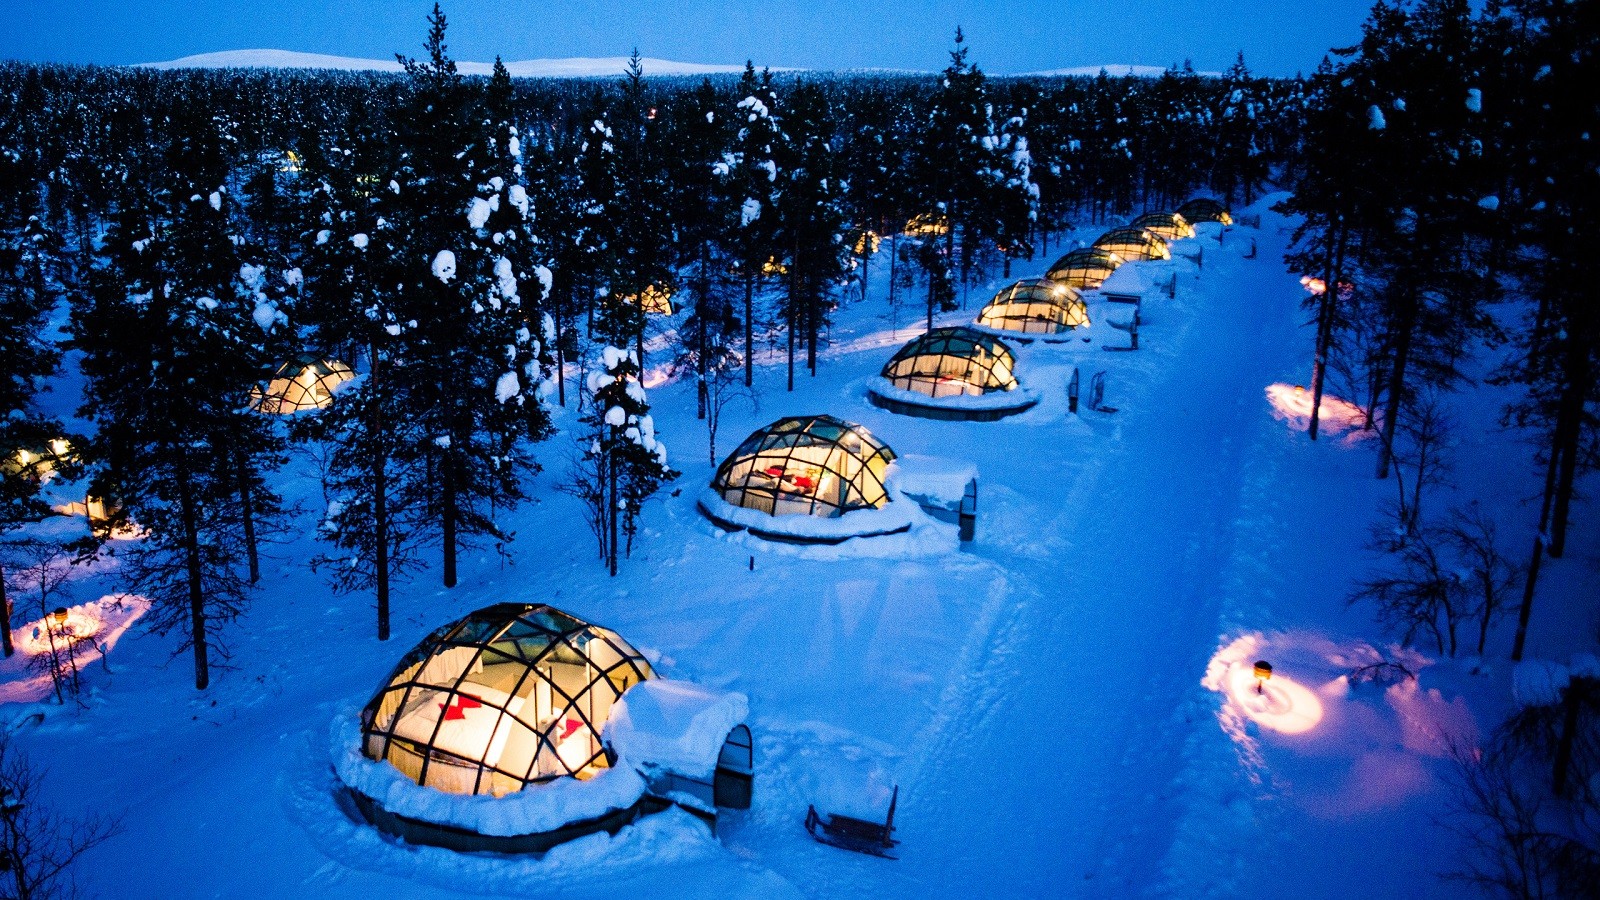 kakslauttanen arctic resort, man made, igloo, finland, saariselkä, tree